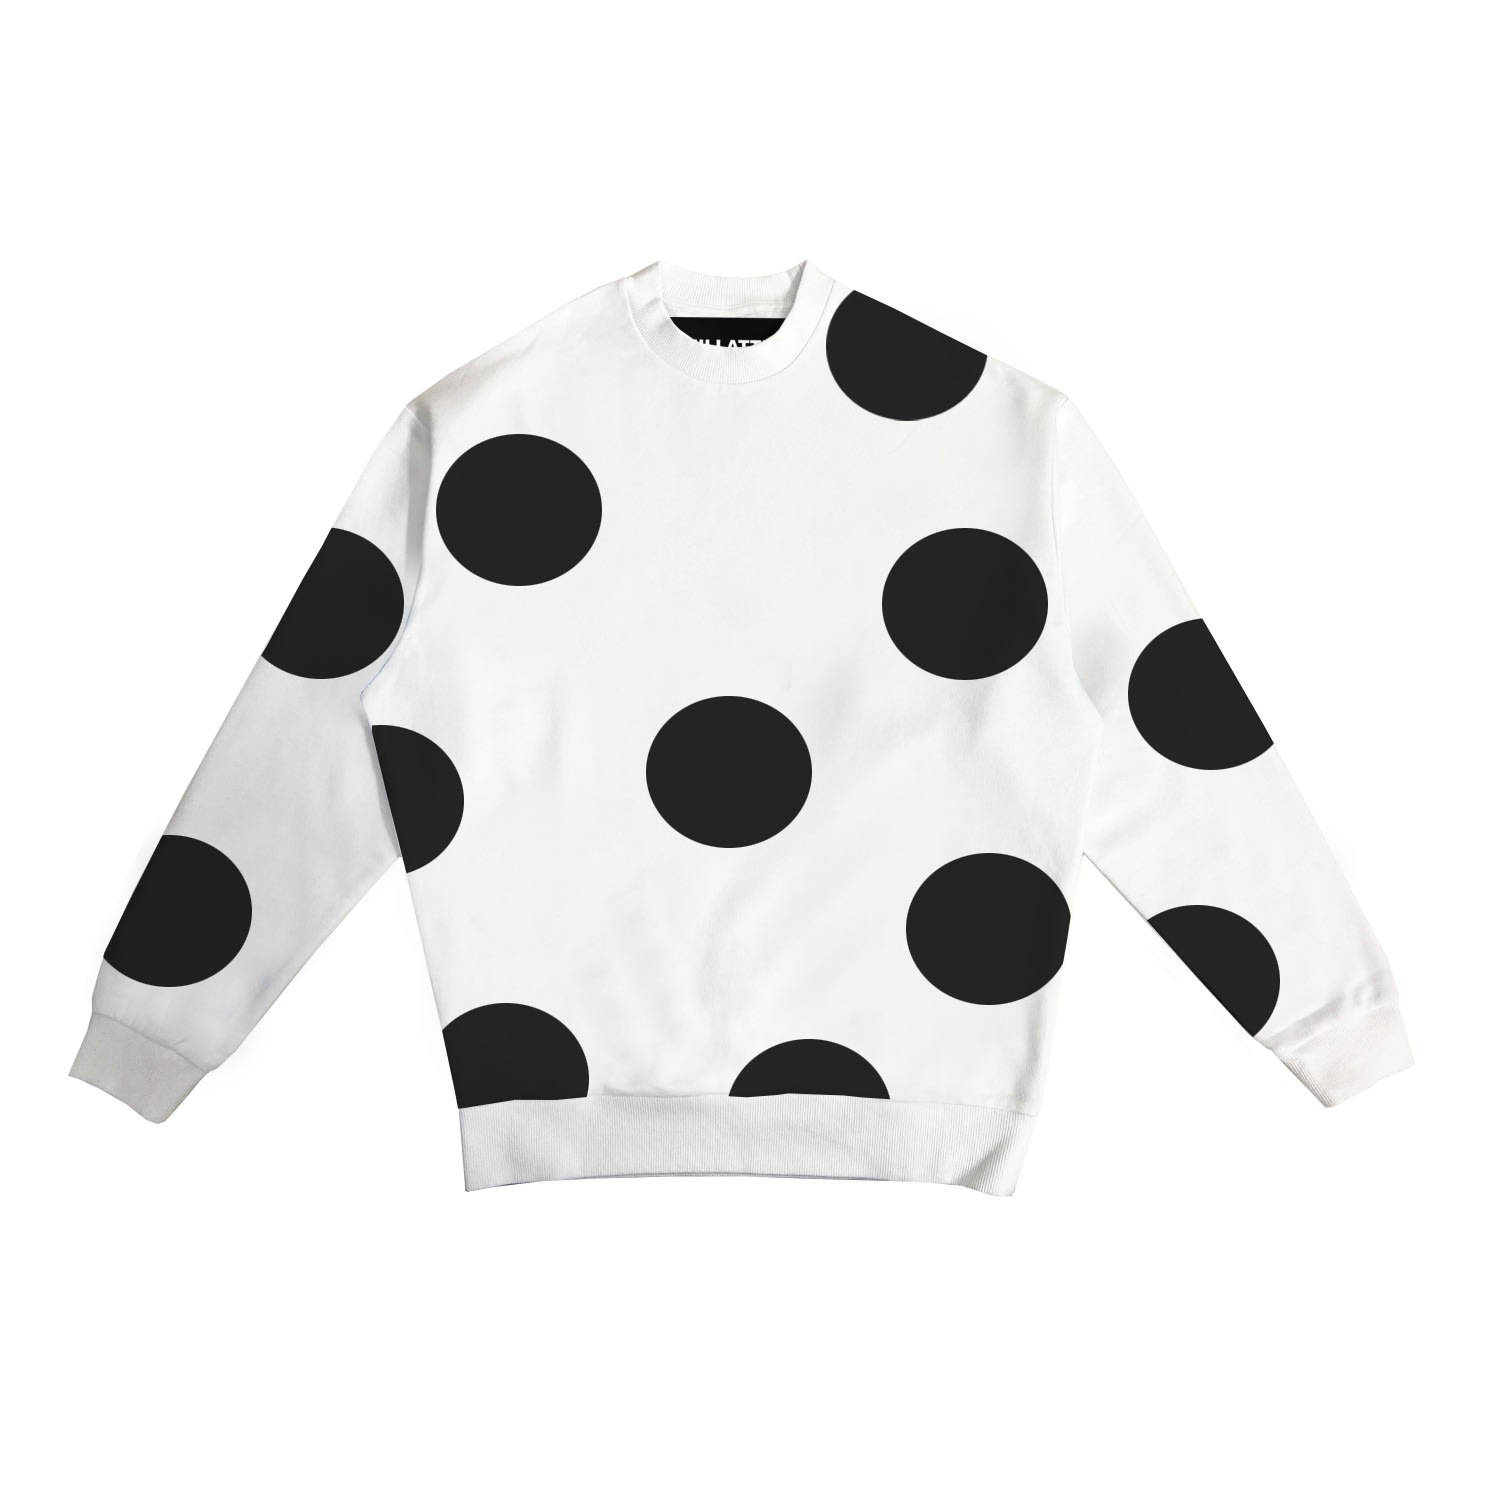 Men's White / Black White Sweatshirt With Black Polka Dots Extra Small Quillattire